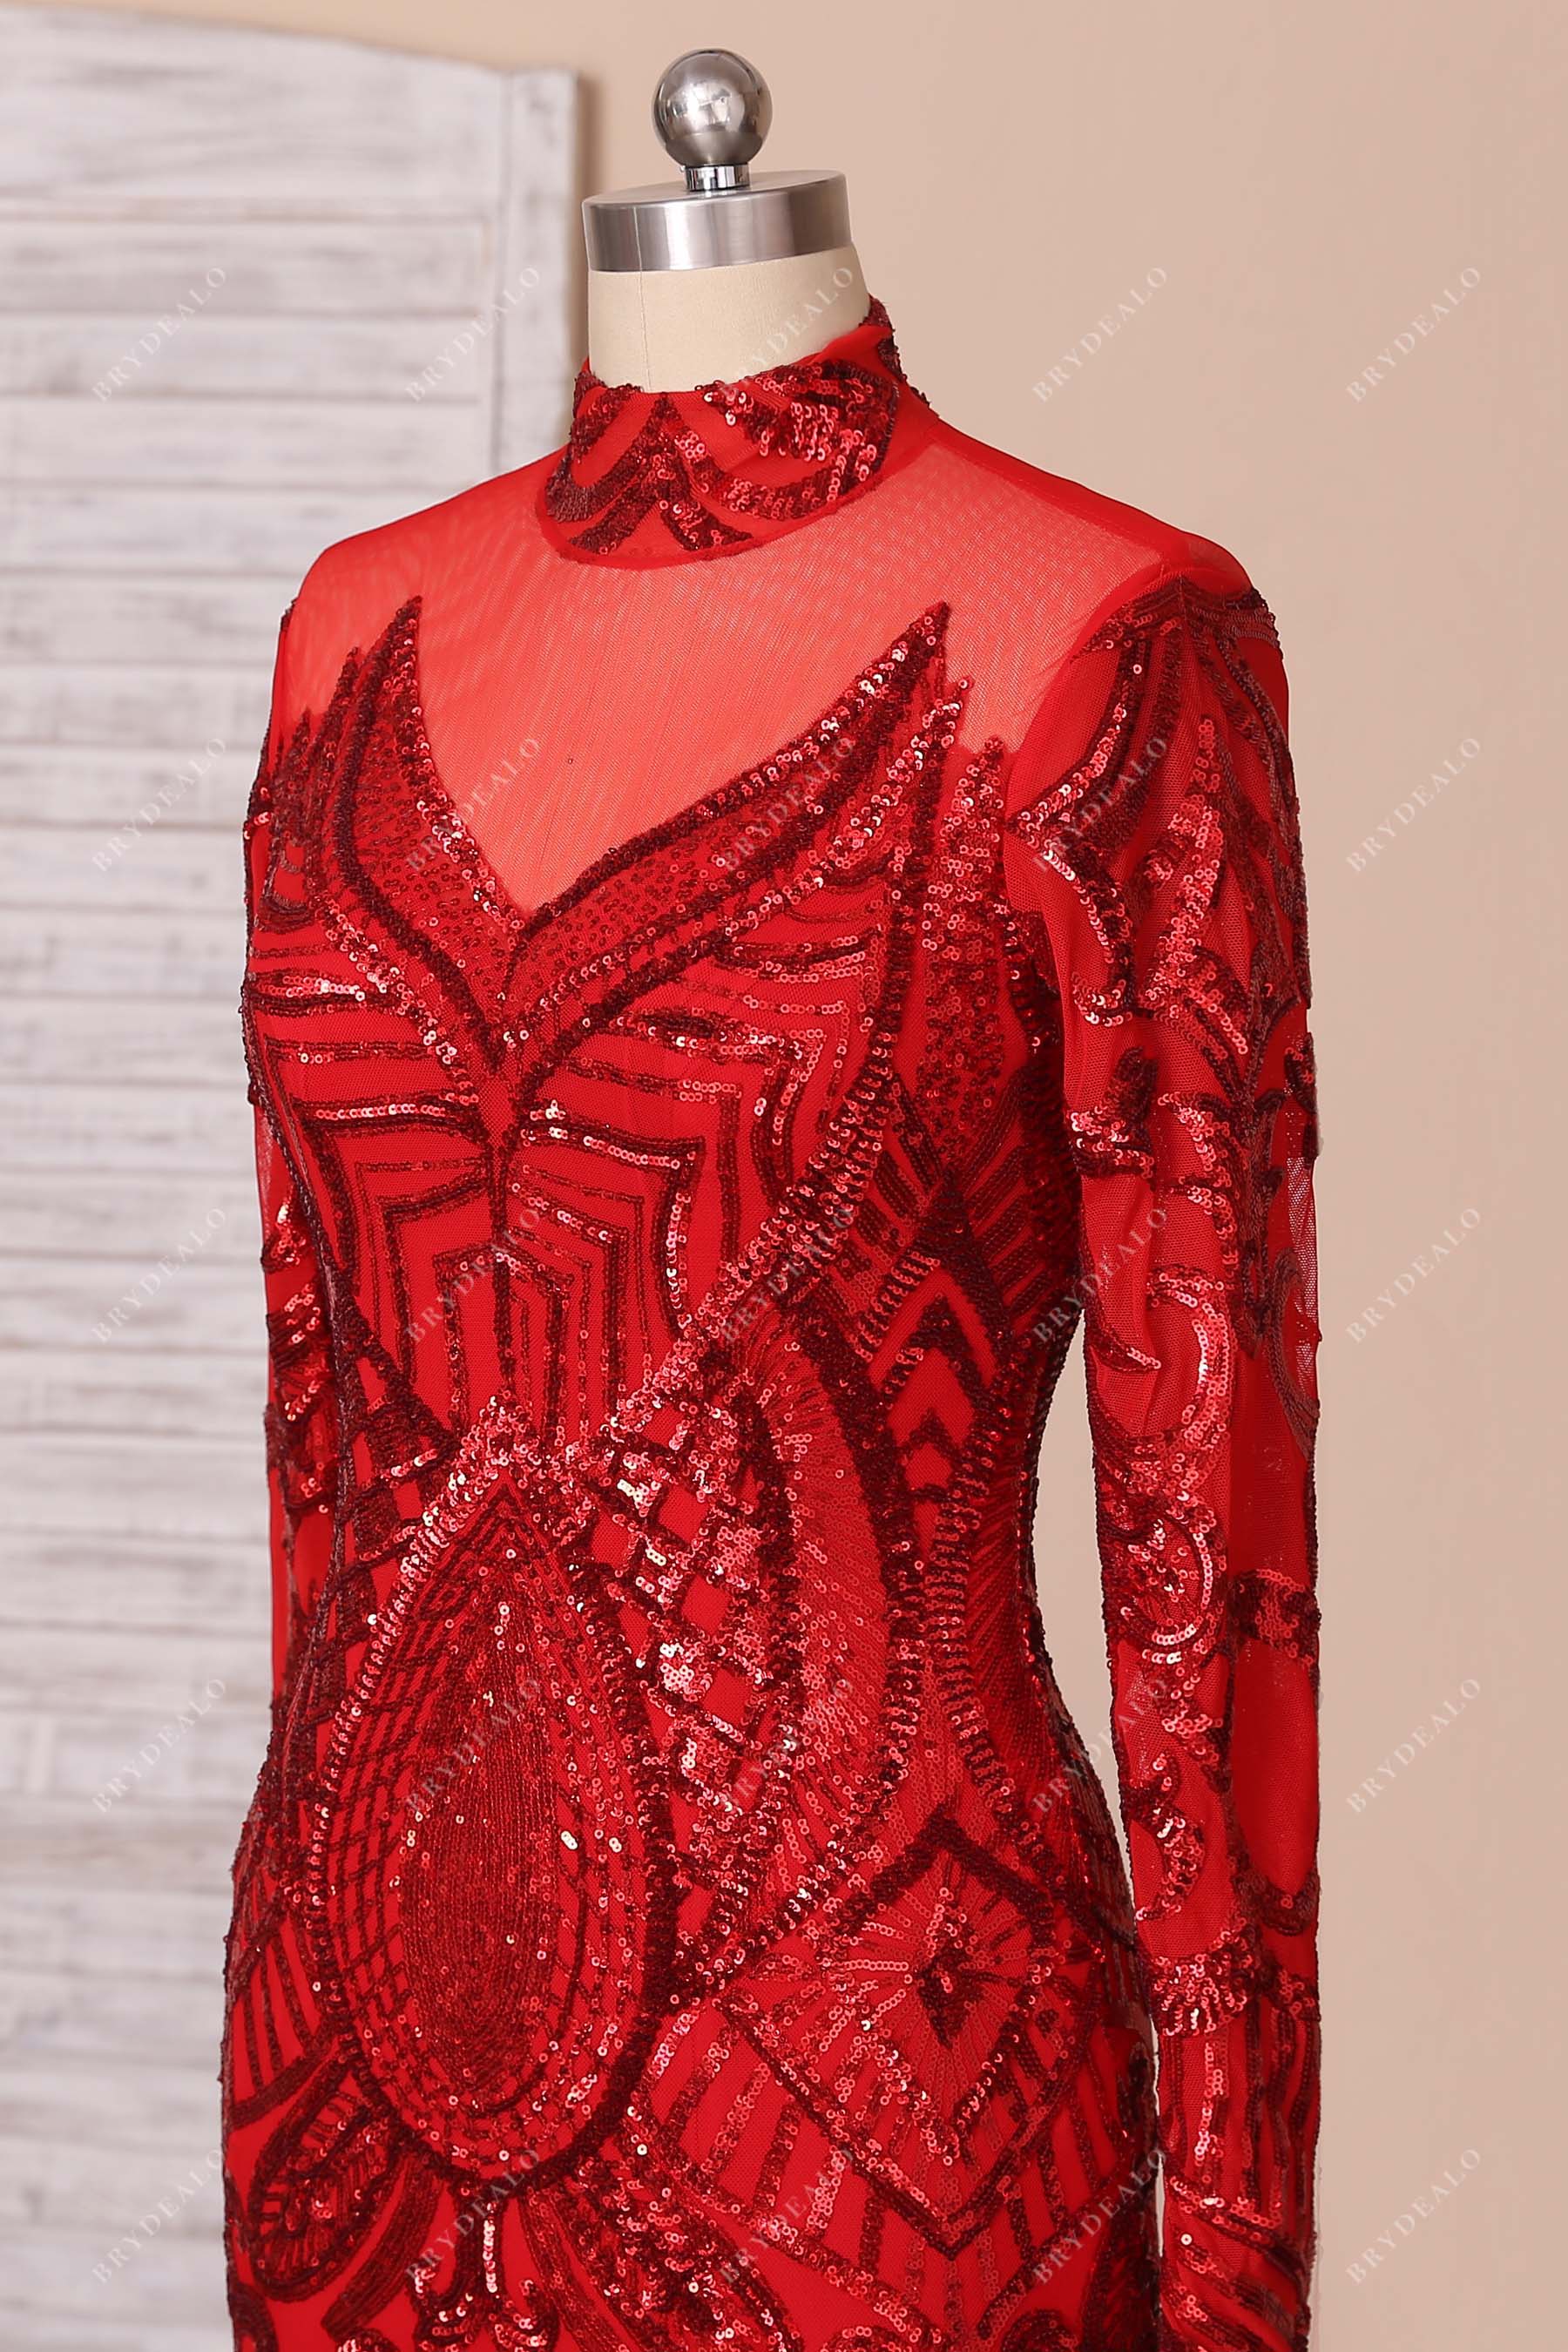 unique sequin red high neck prom dress